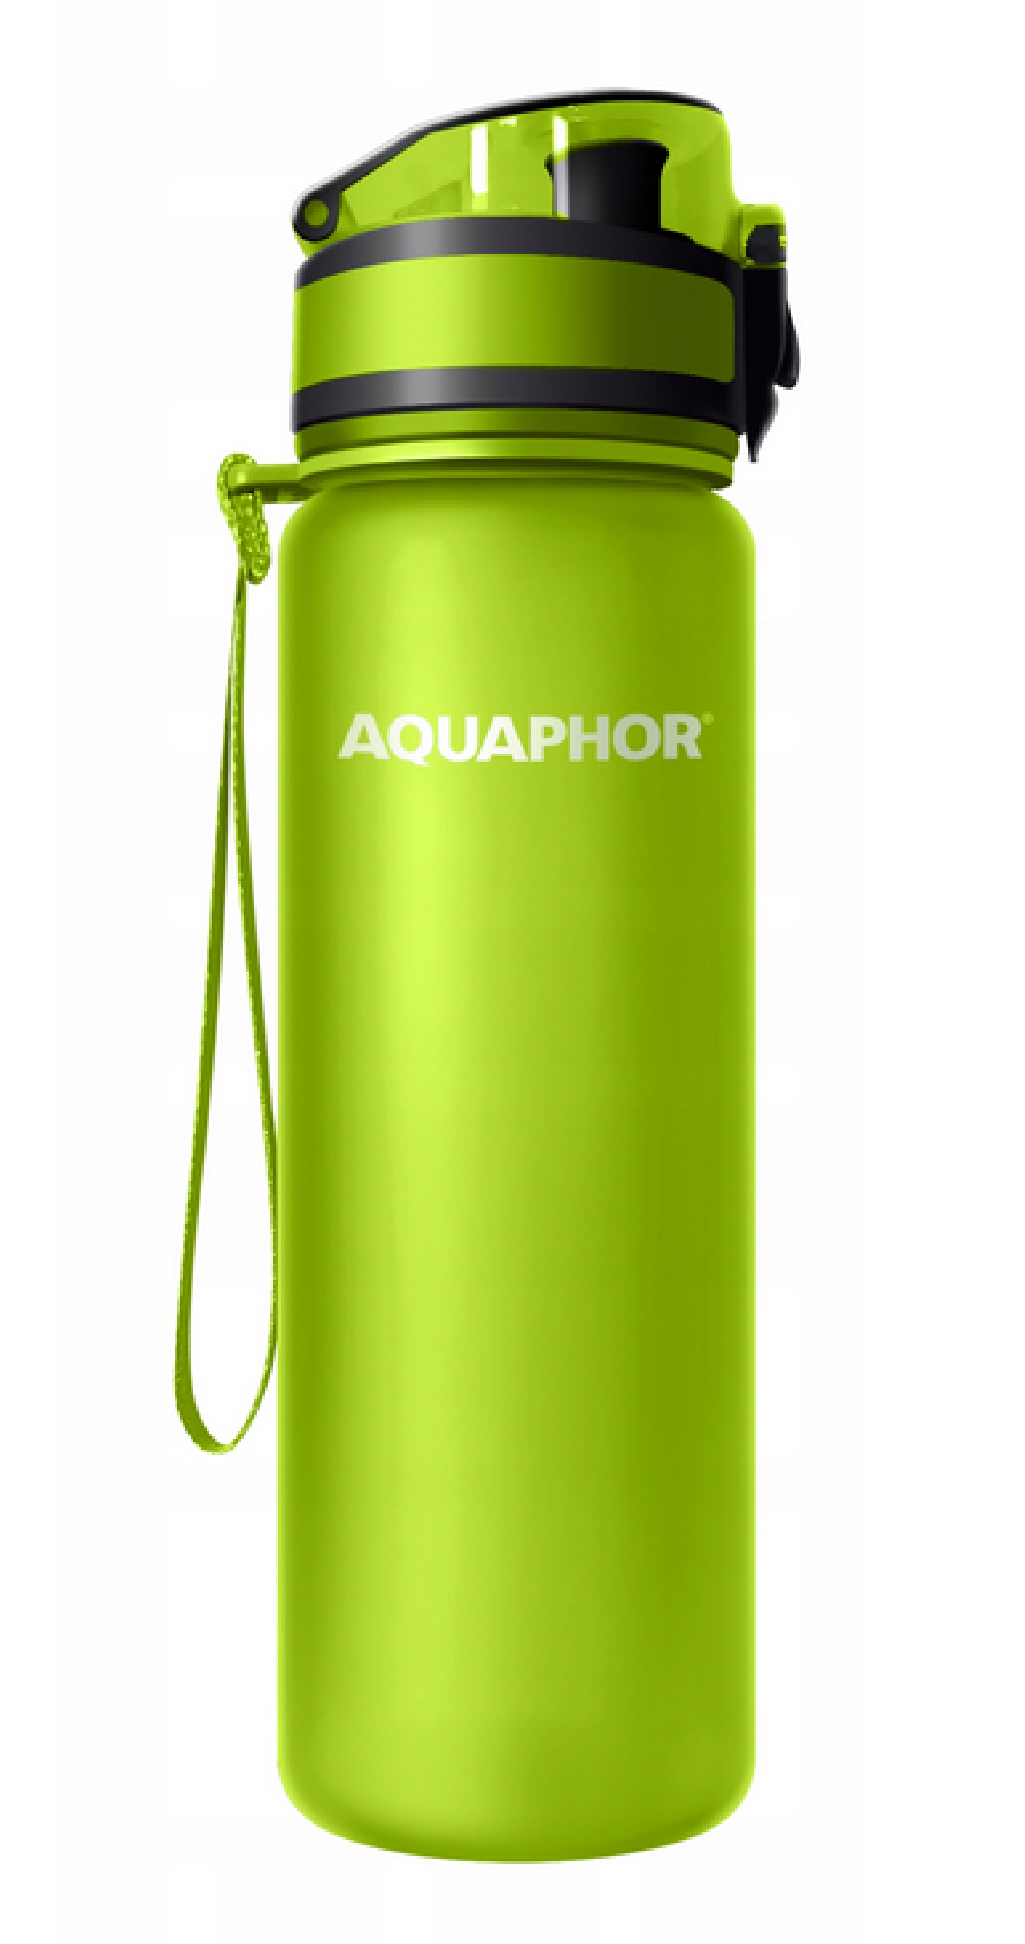 Butelka filtrująca Aquaphor City zielona